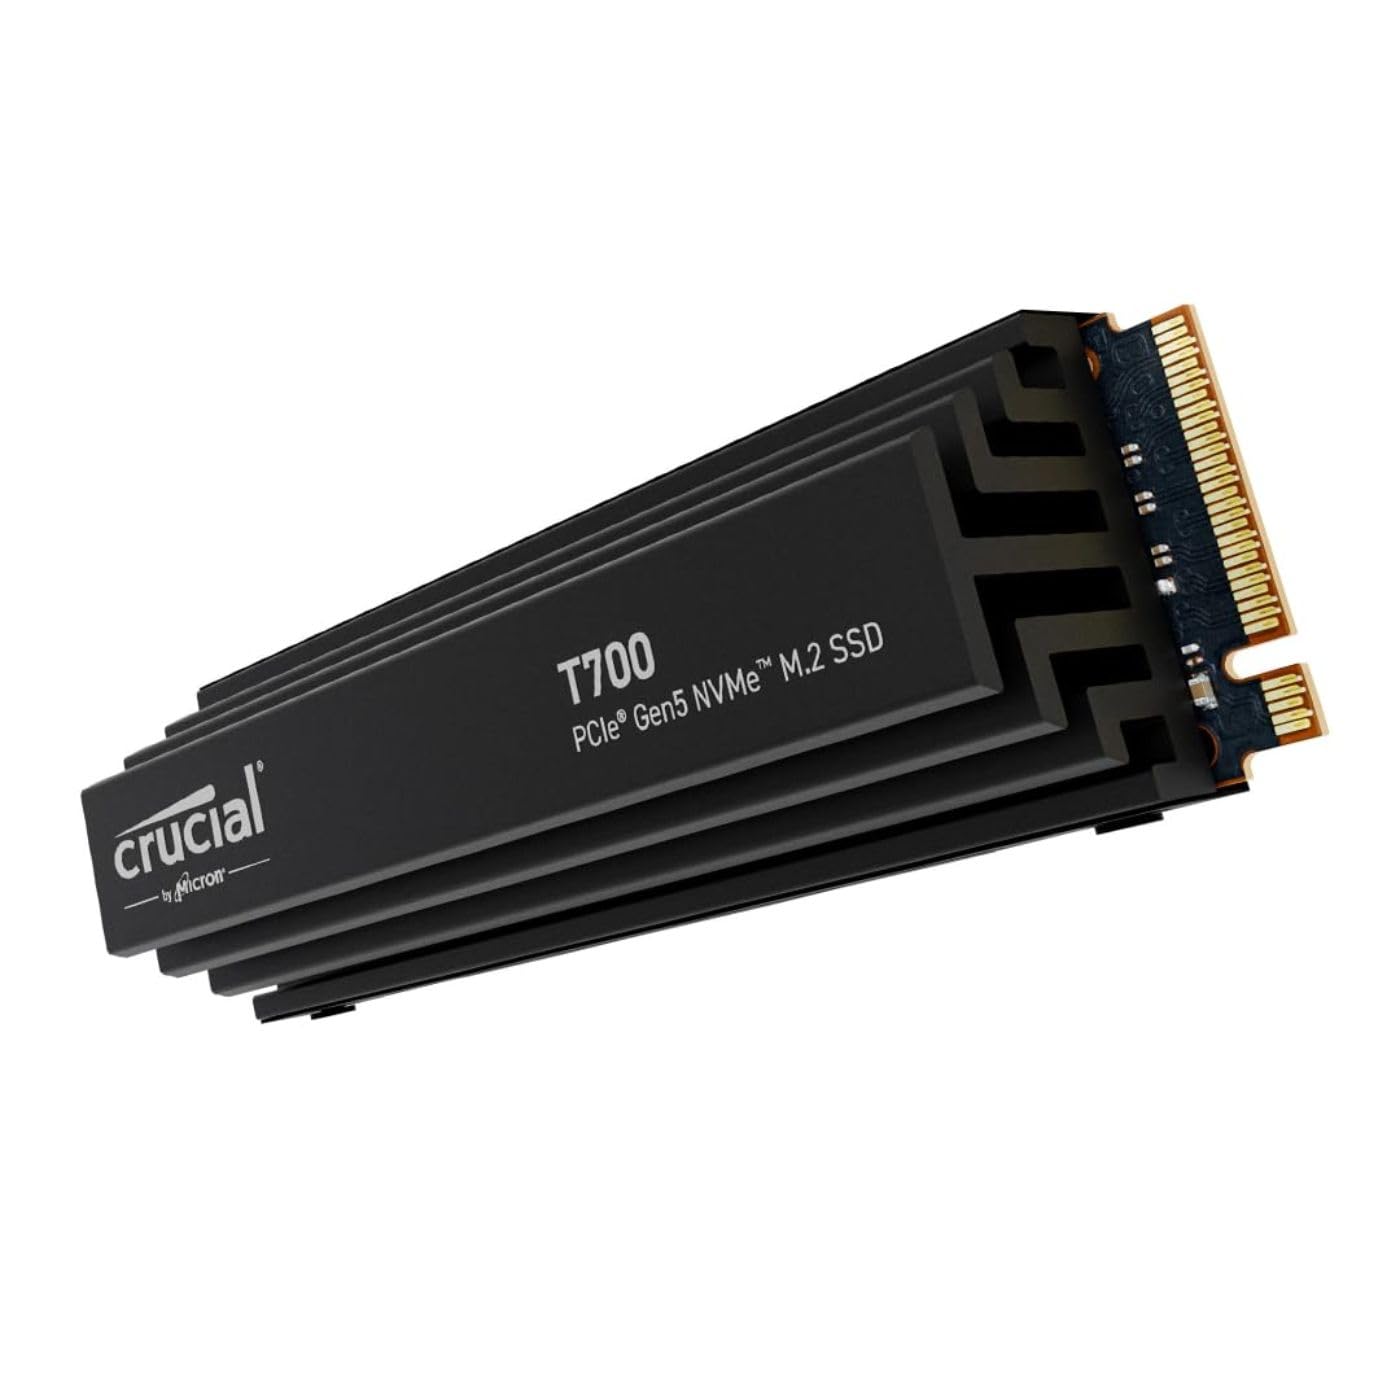 Crucial T700 4TB | NVMe PCIe 5.0 M.2 SSD